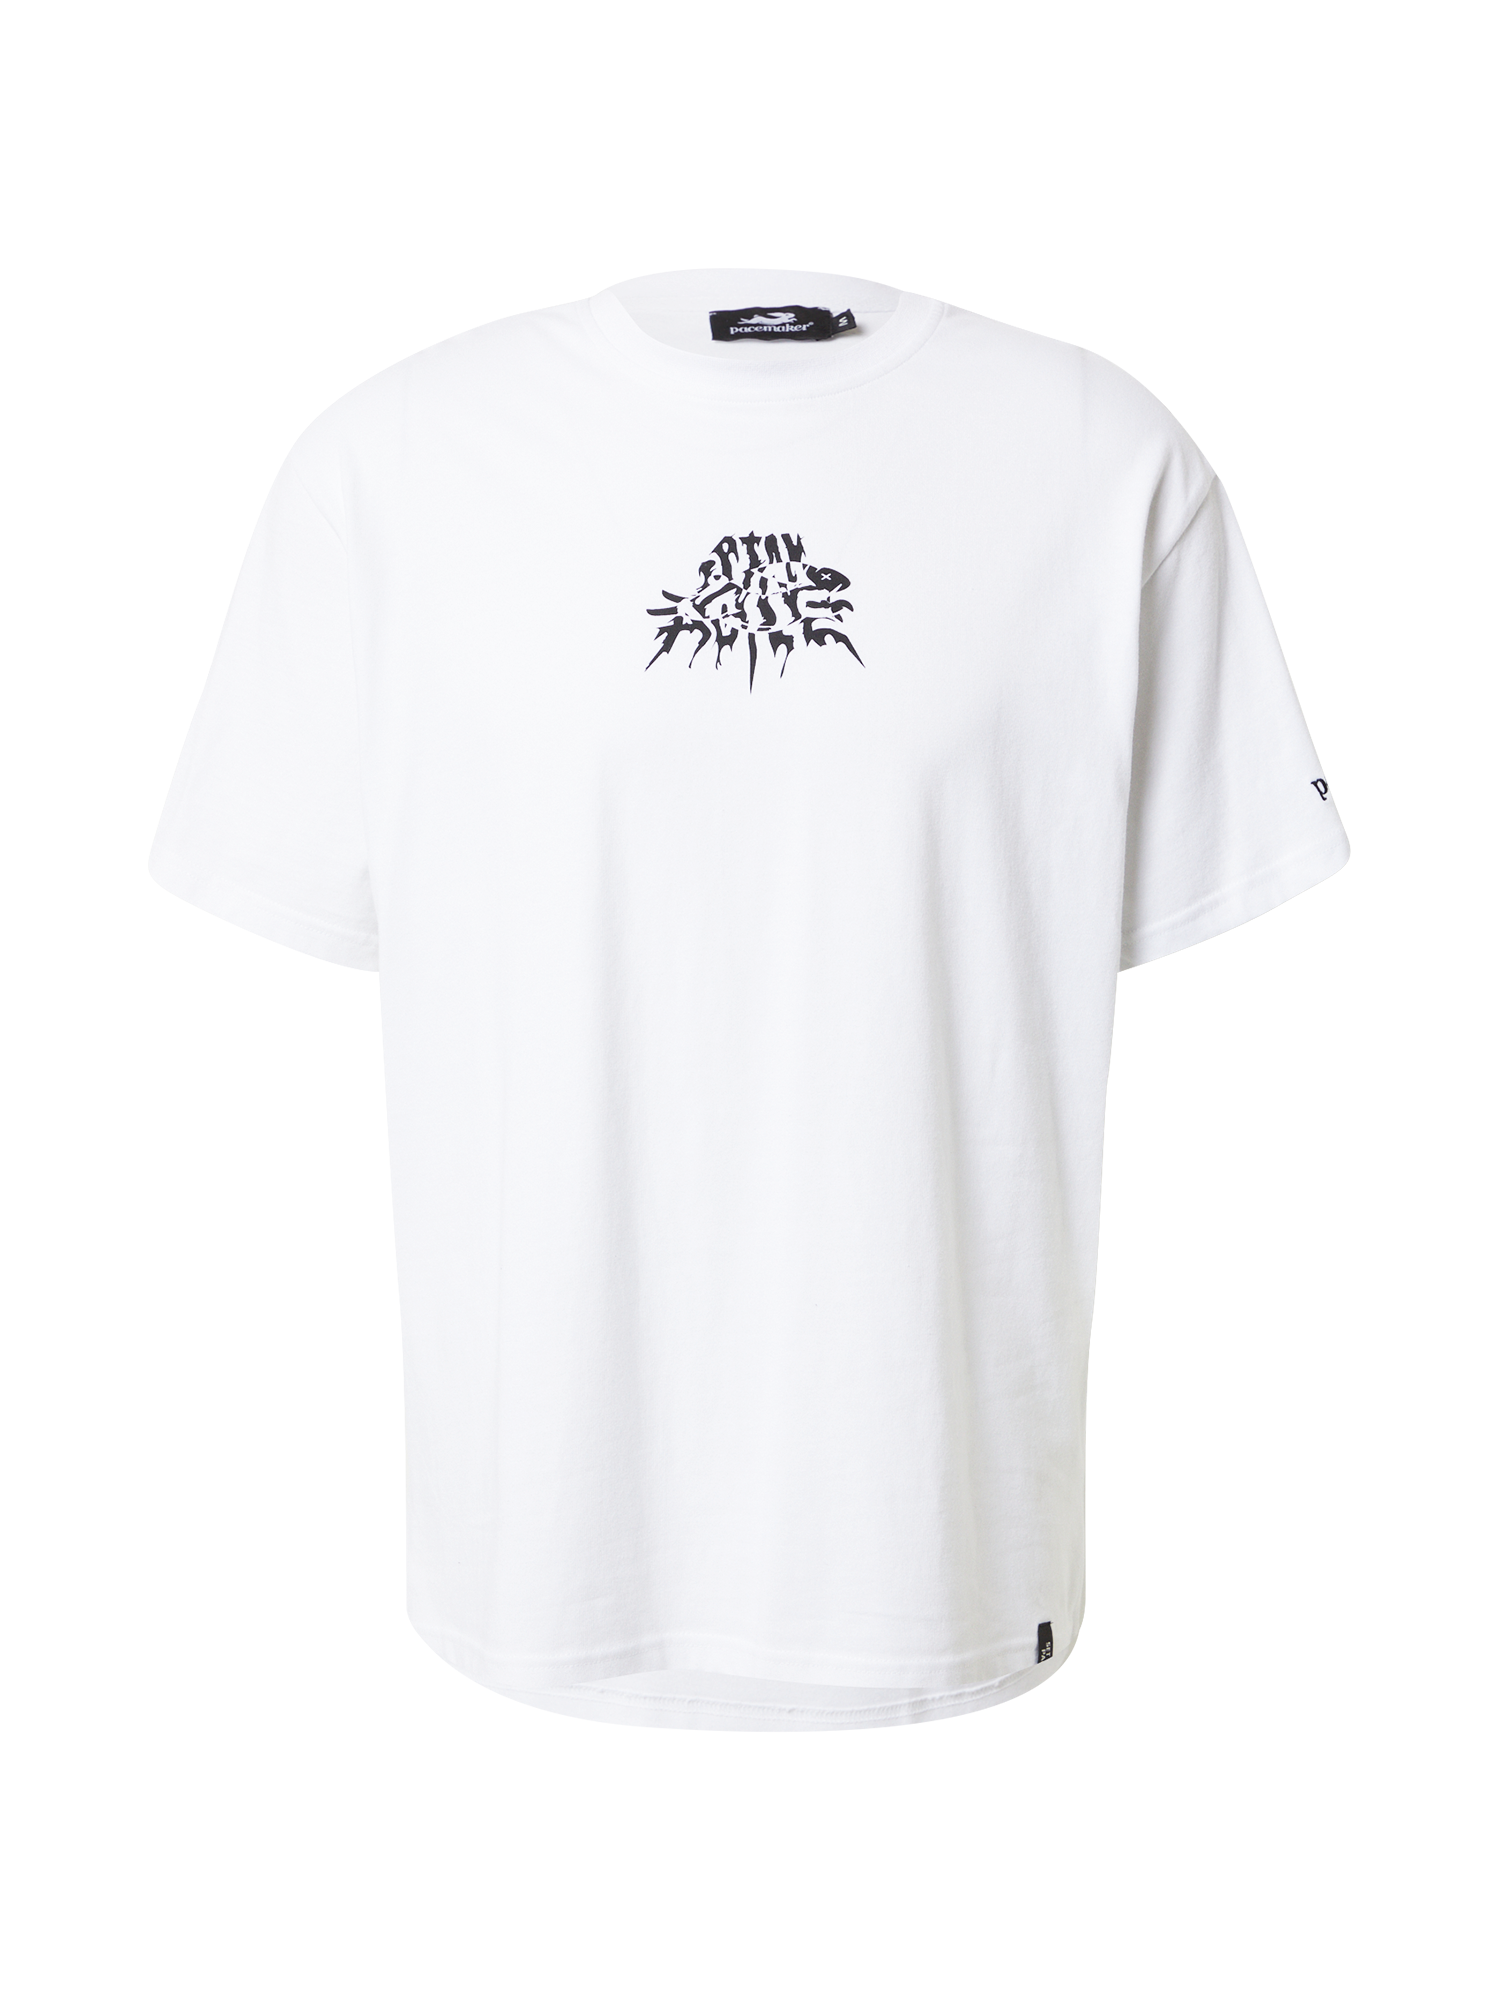 Pacemaker Koszulka STAY AGILE w kolorze Białym 